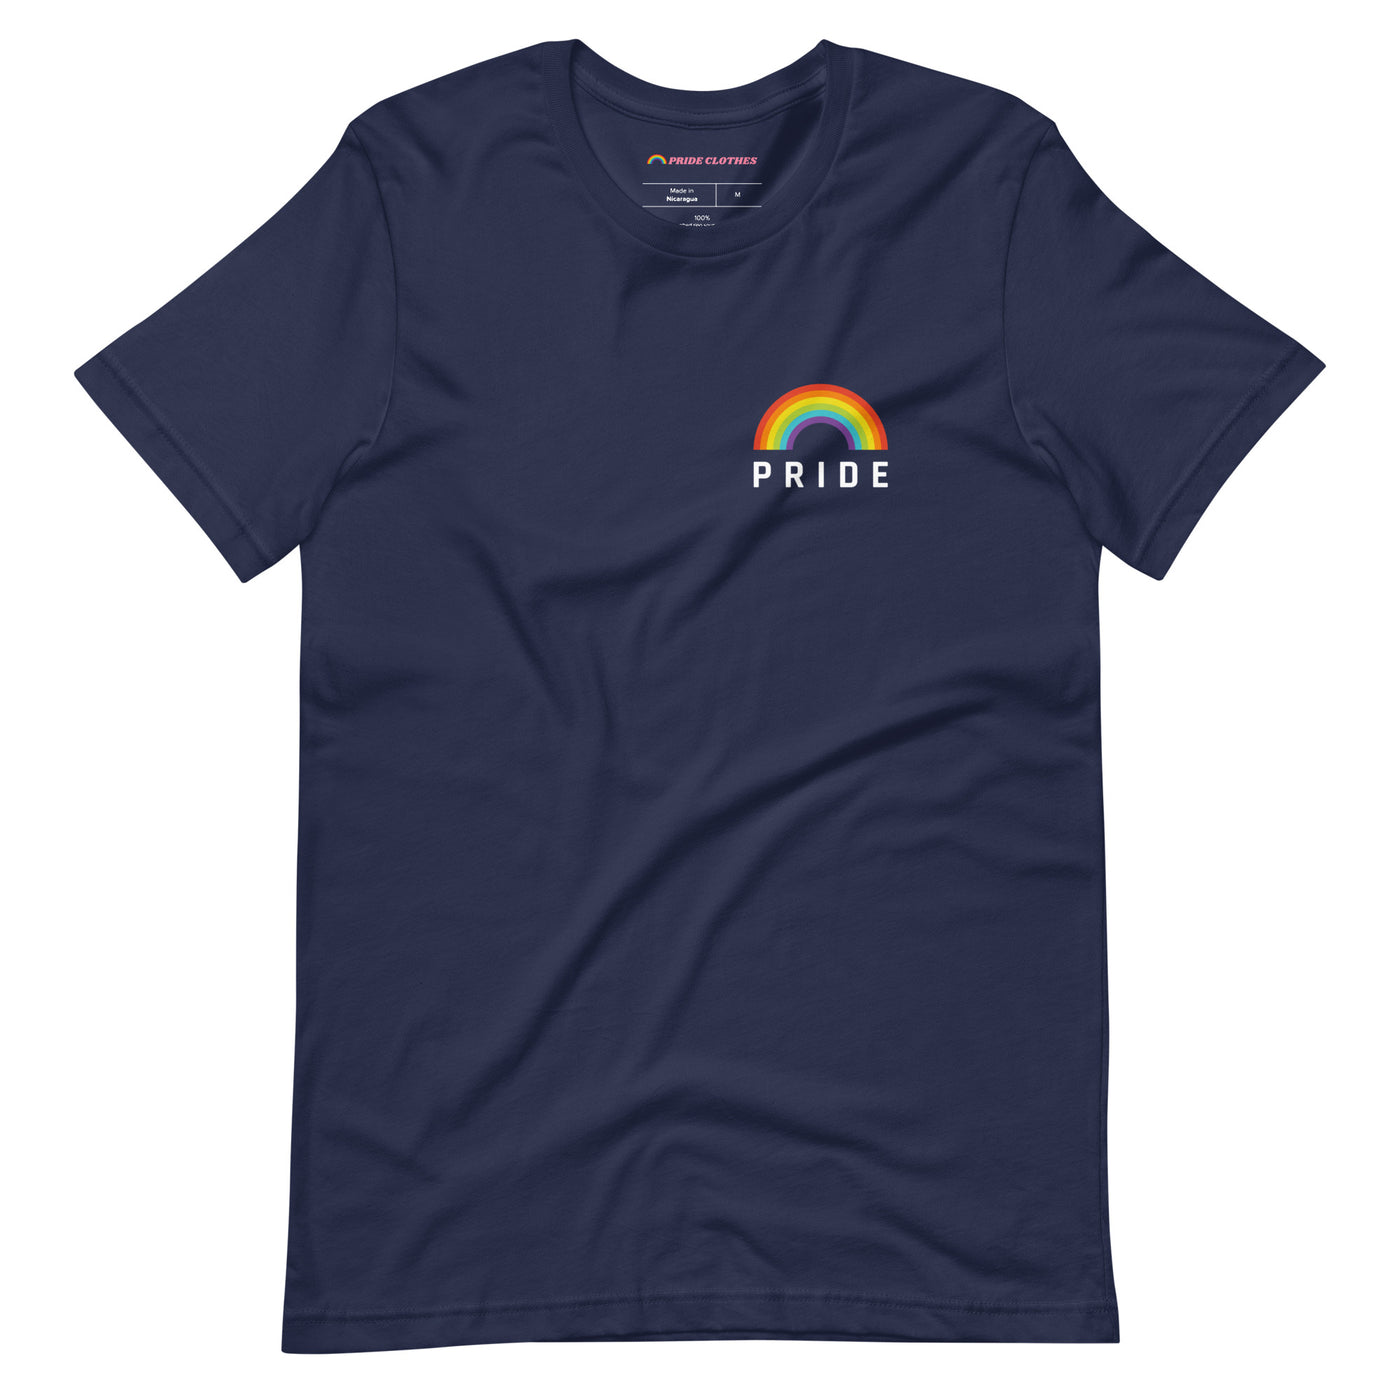 Pride Clothes - Got Pride? Astounding Rainbow Pride Clothes T-Shirt - Navy